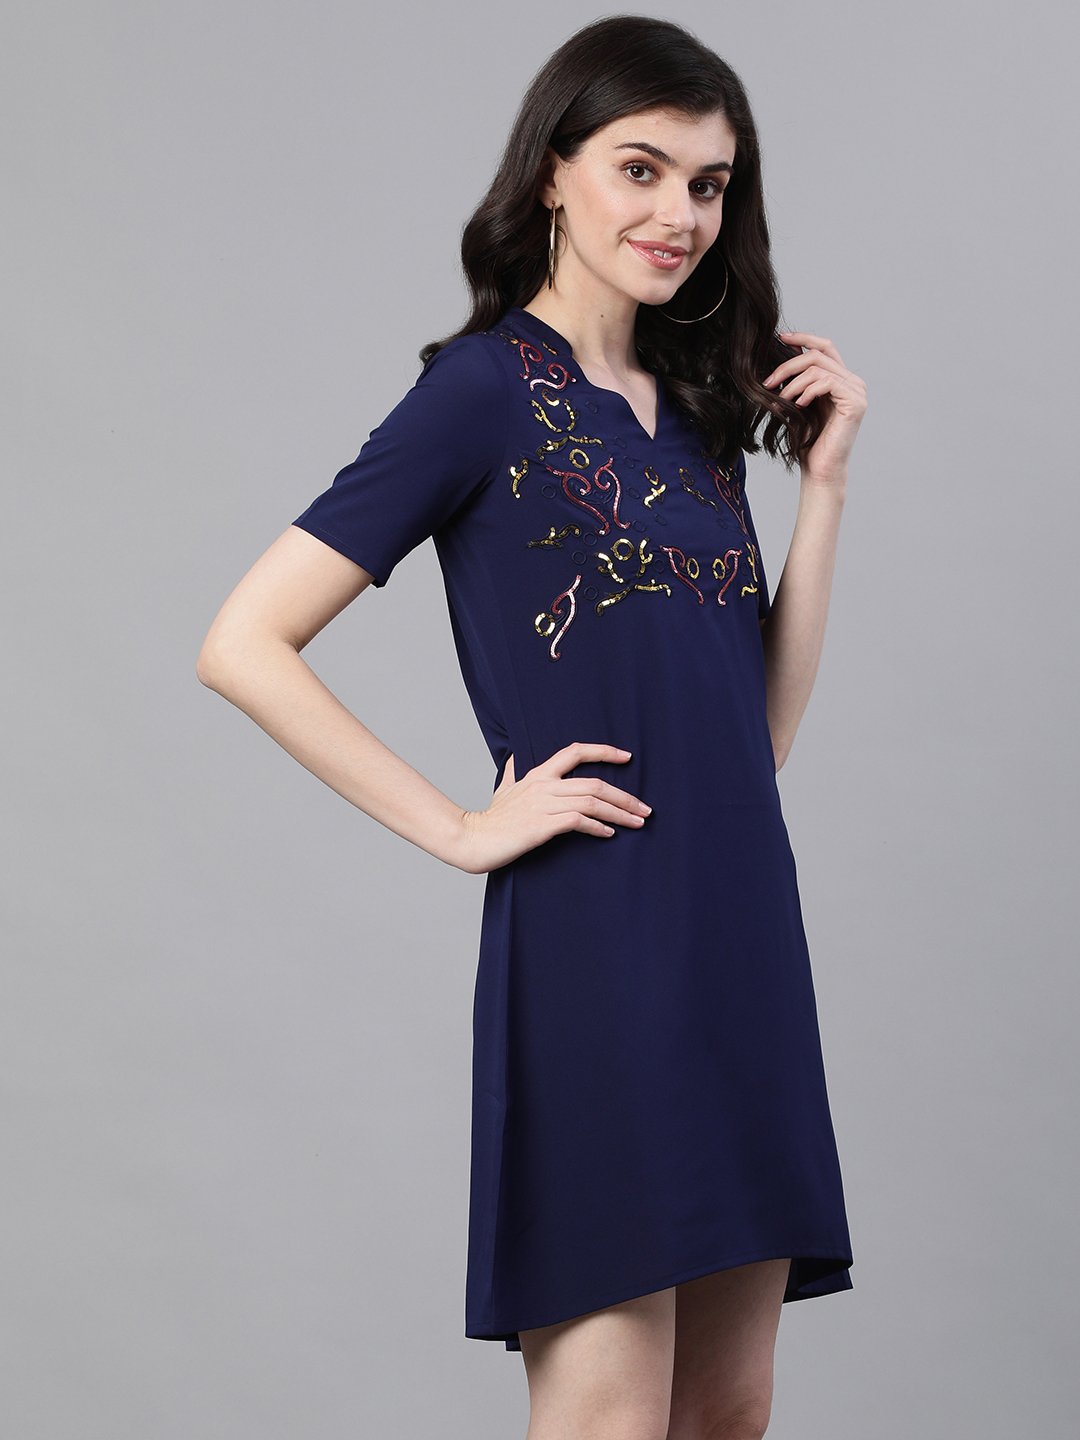 Ishin Women's Poly Crepe Blue Embellished A-Line Dress